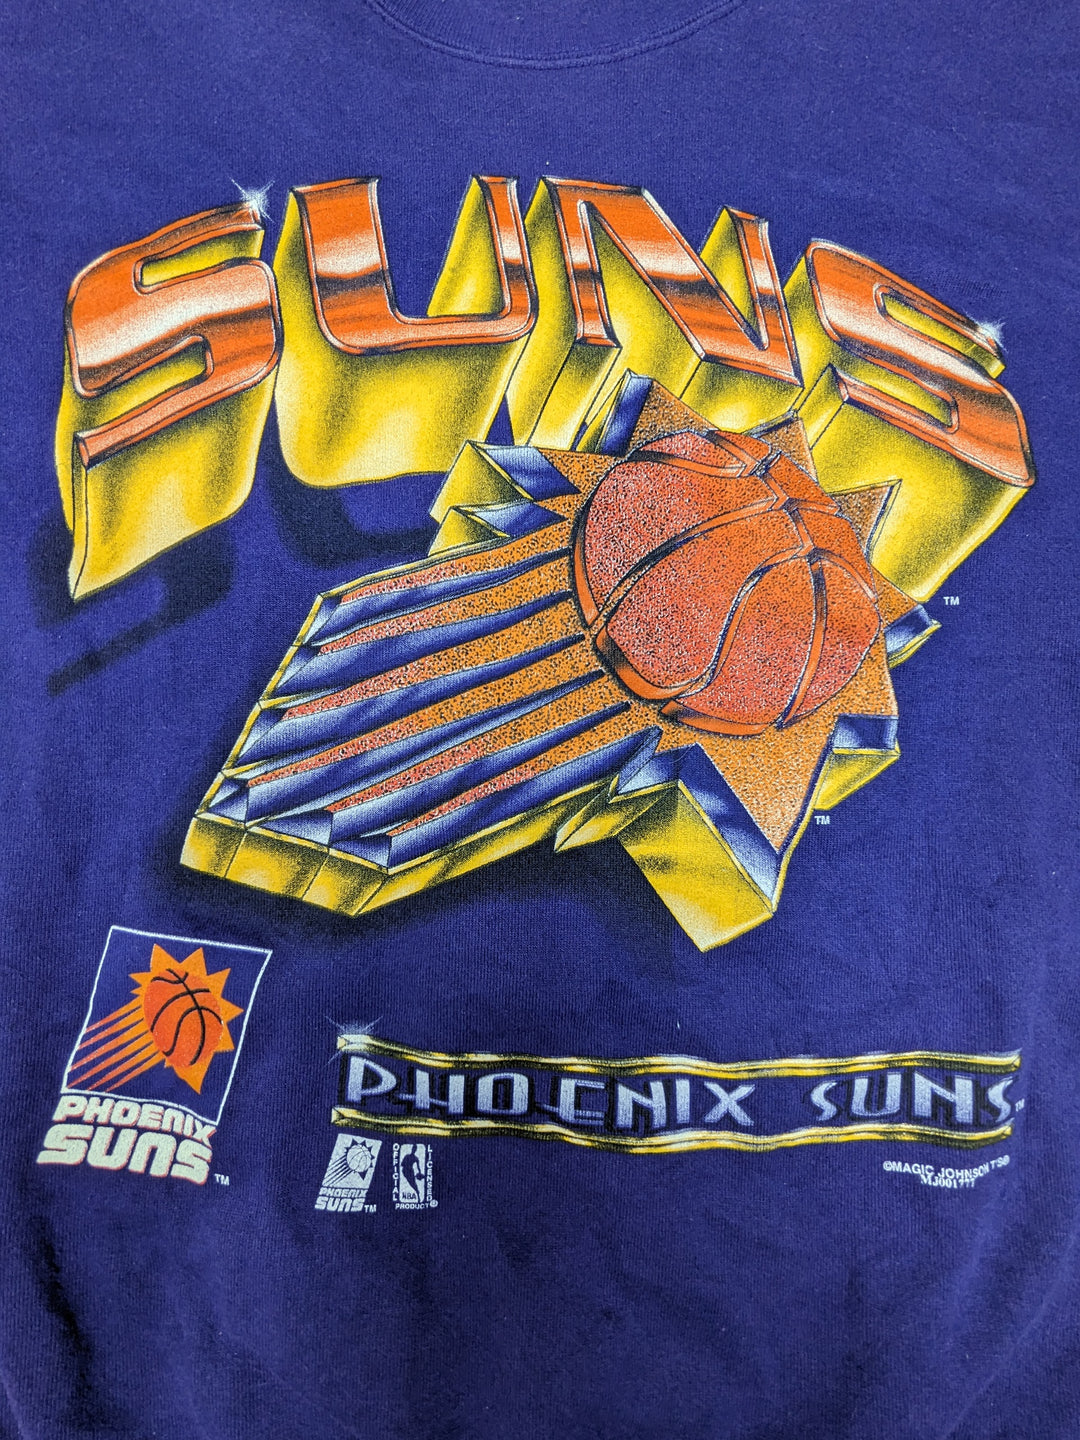 Phoenix Suns Sweatshirt 1 pc 1 lb B0119202-05 - Raghouse